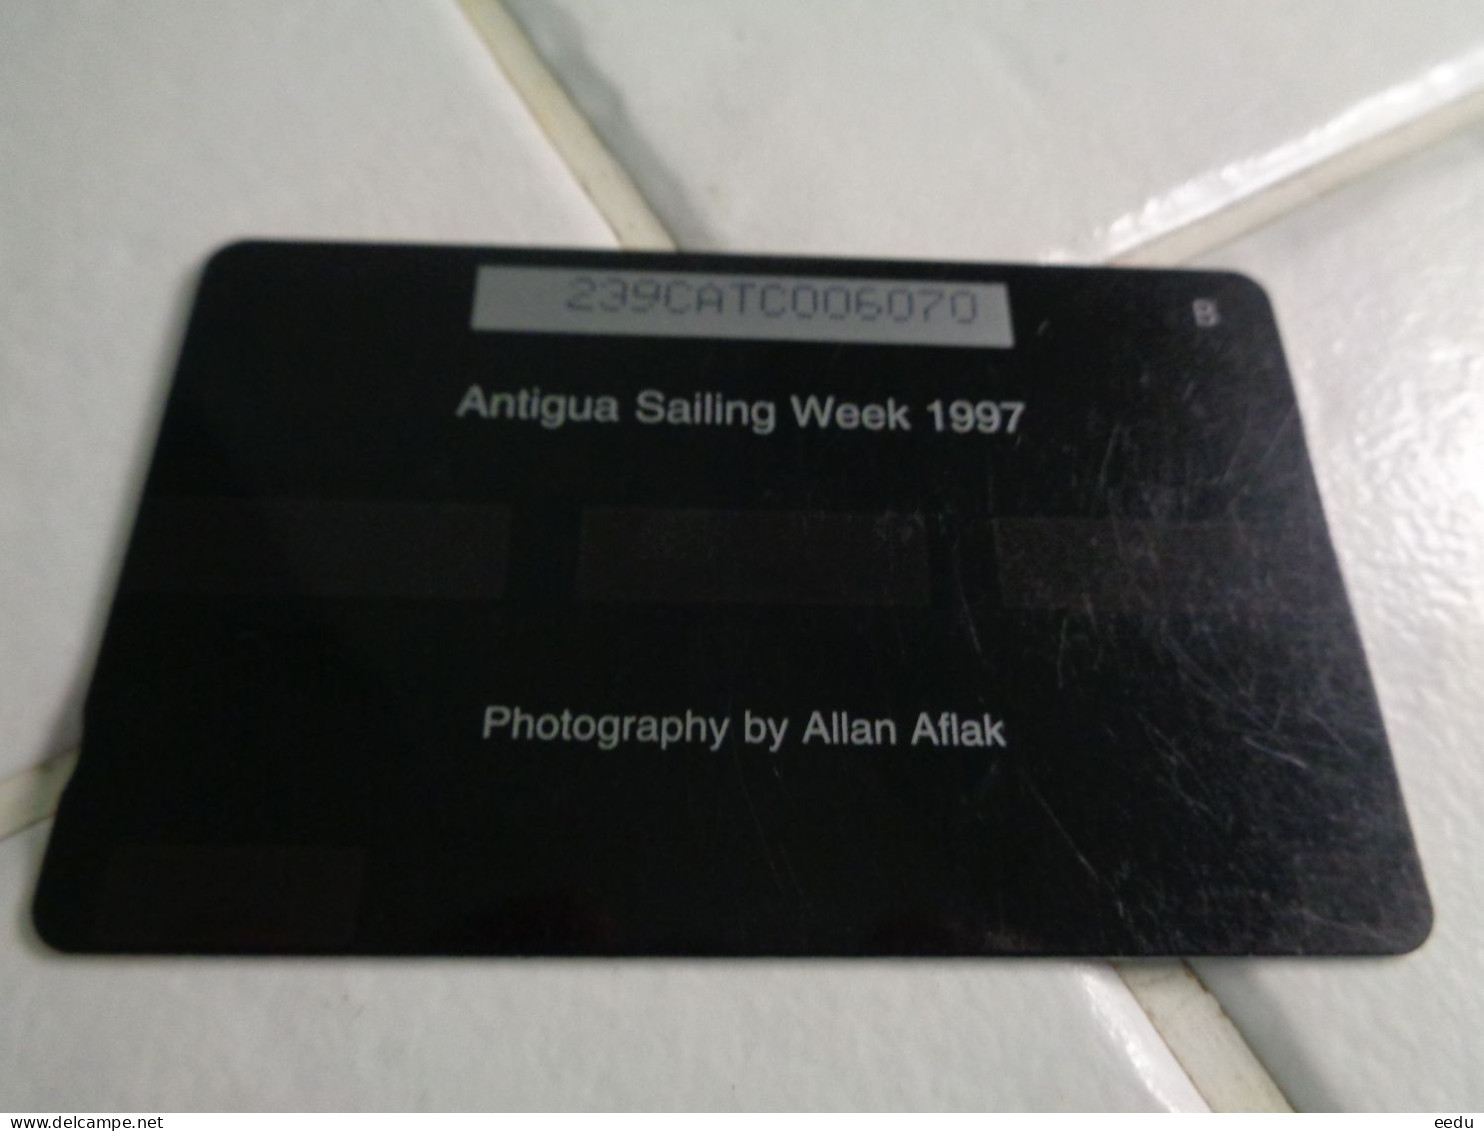 Antigua & Barbuda Phonecard - Antigua And Barbuda